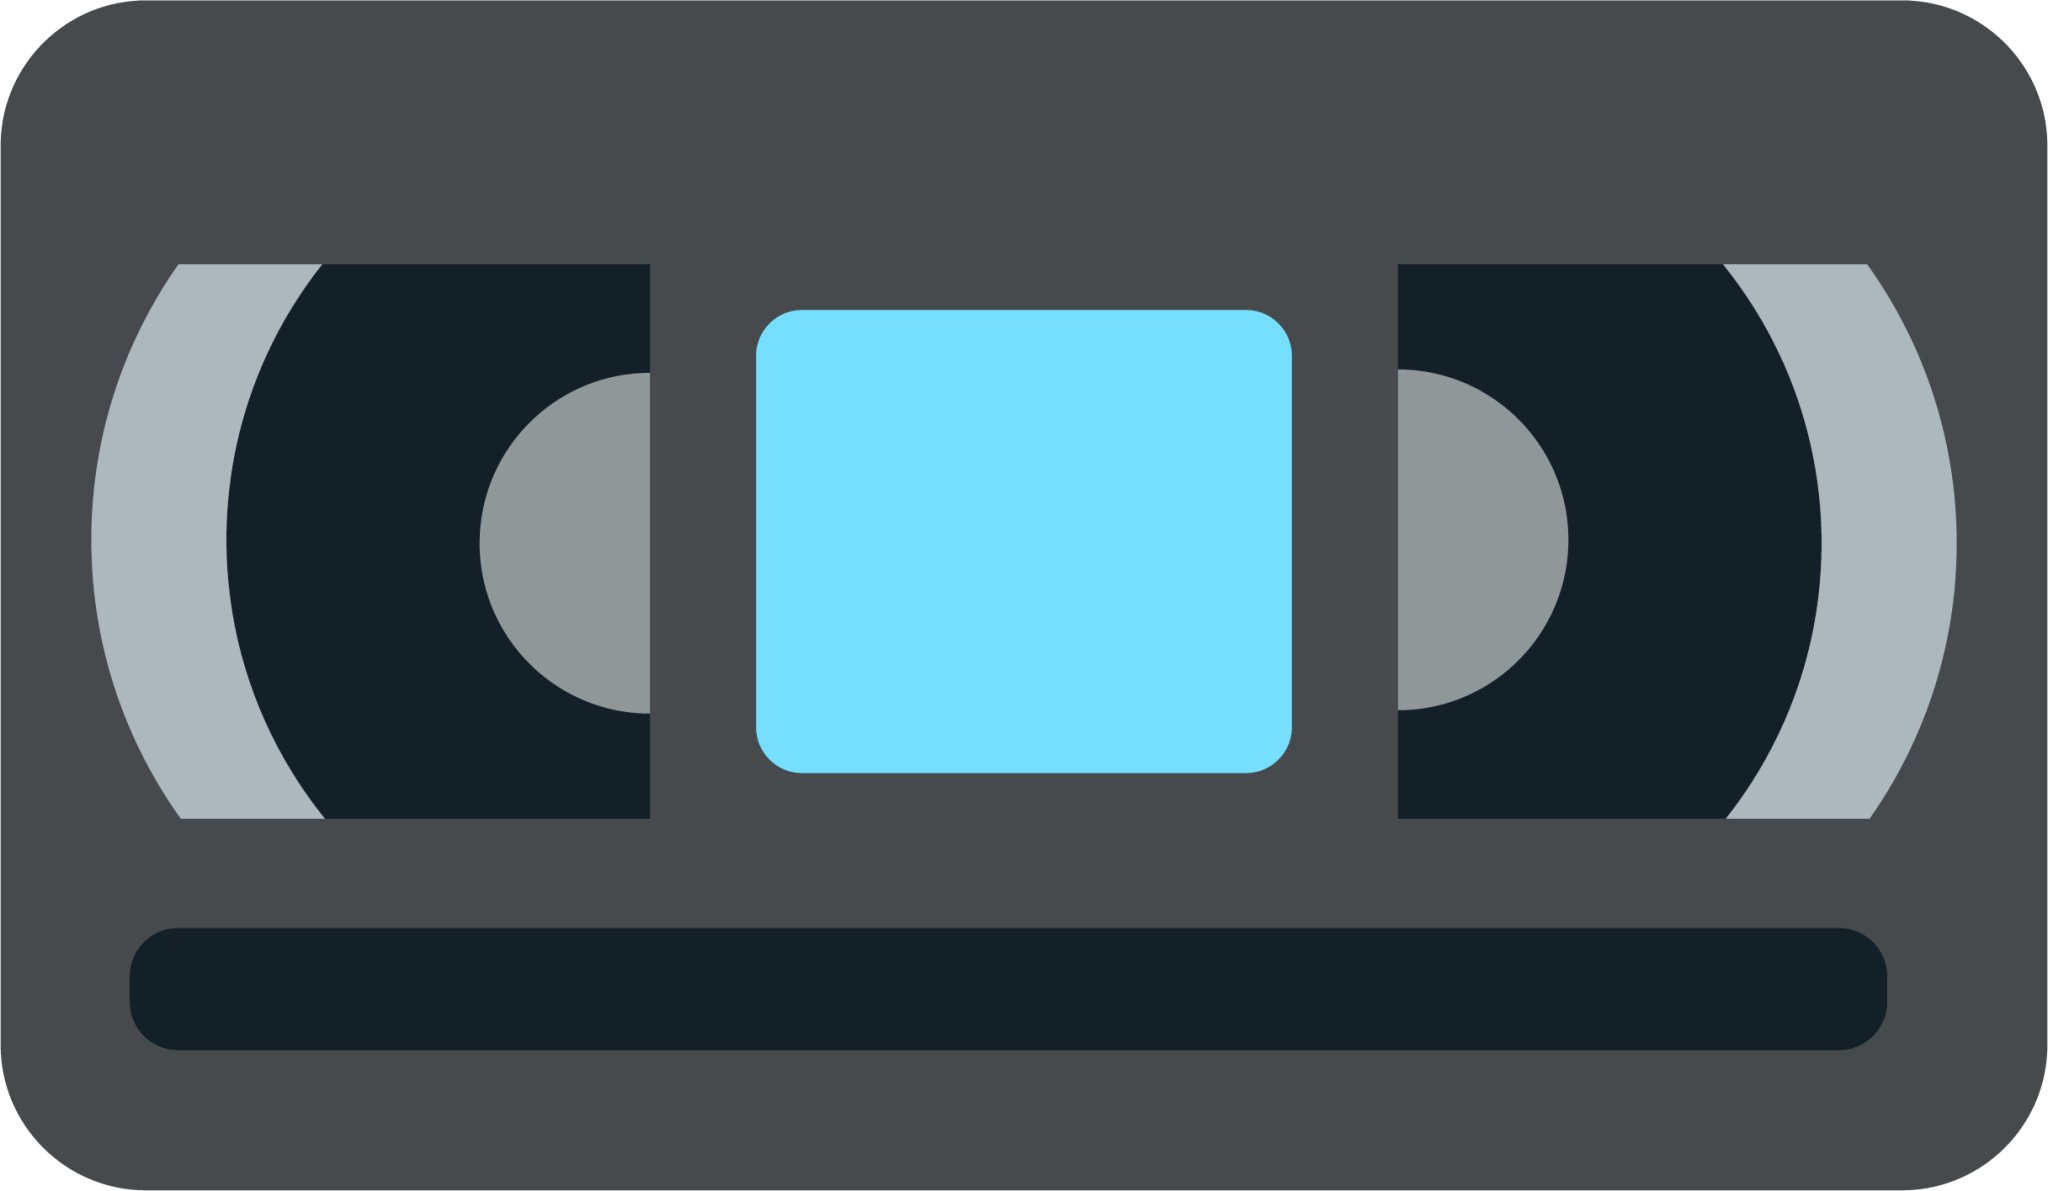 videocassette emoji